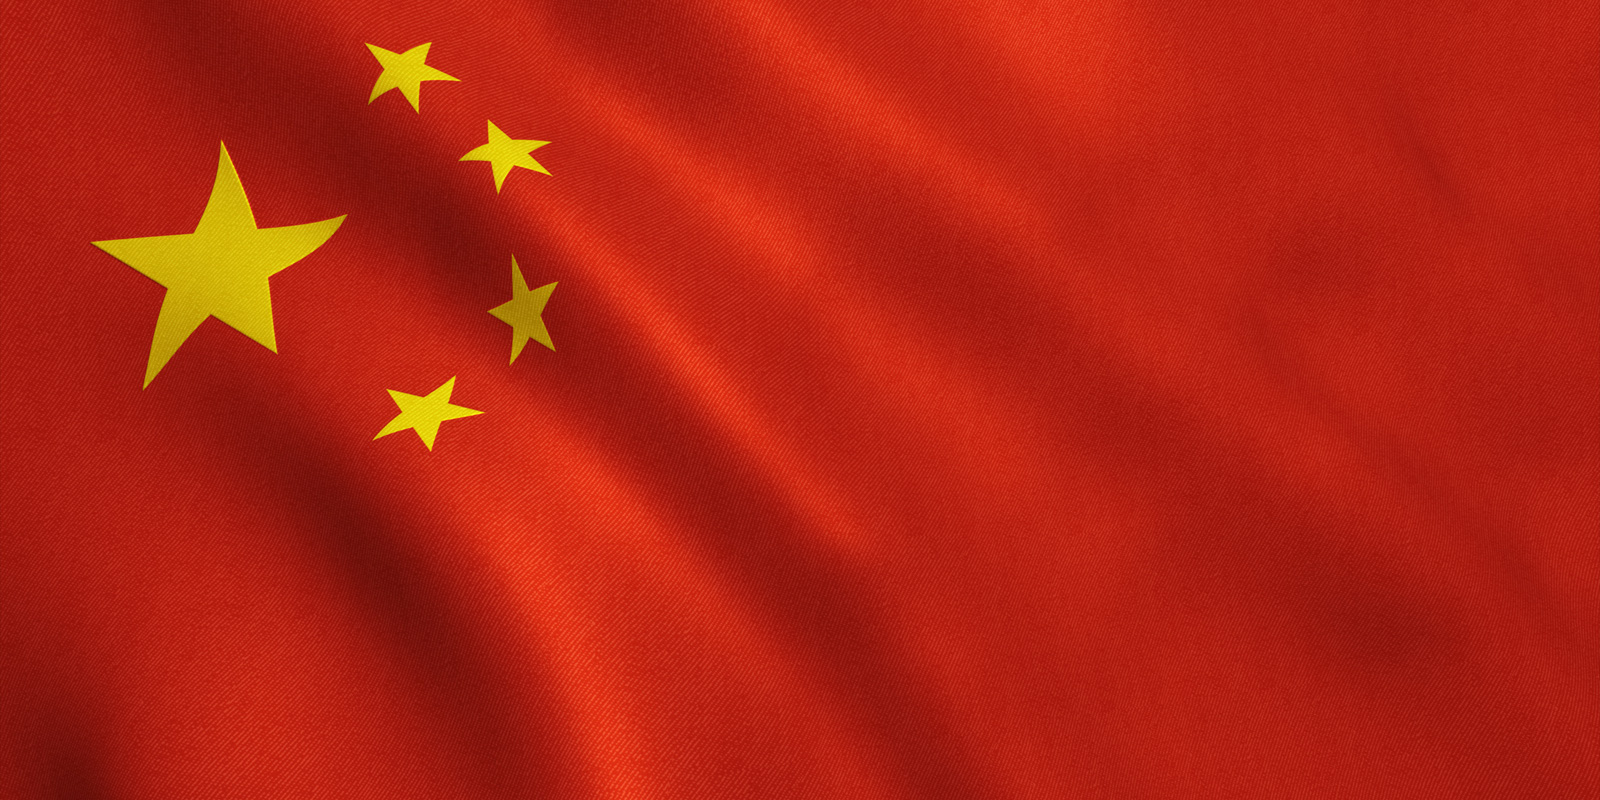 New International Rules of Chinese Arbitration Association Streamline Processes